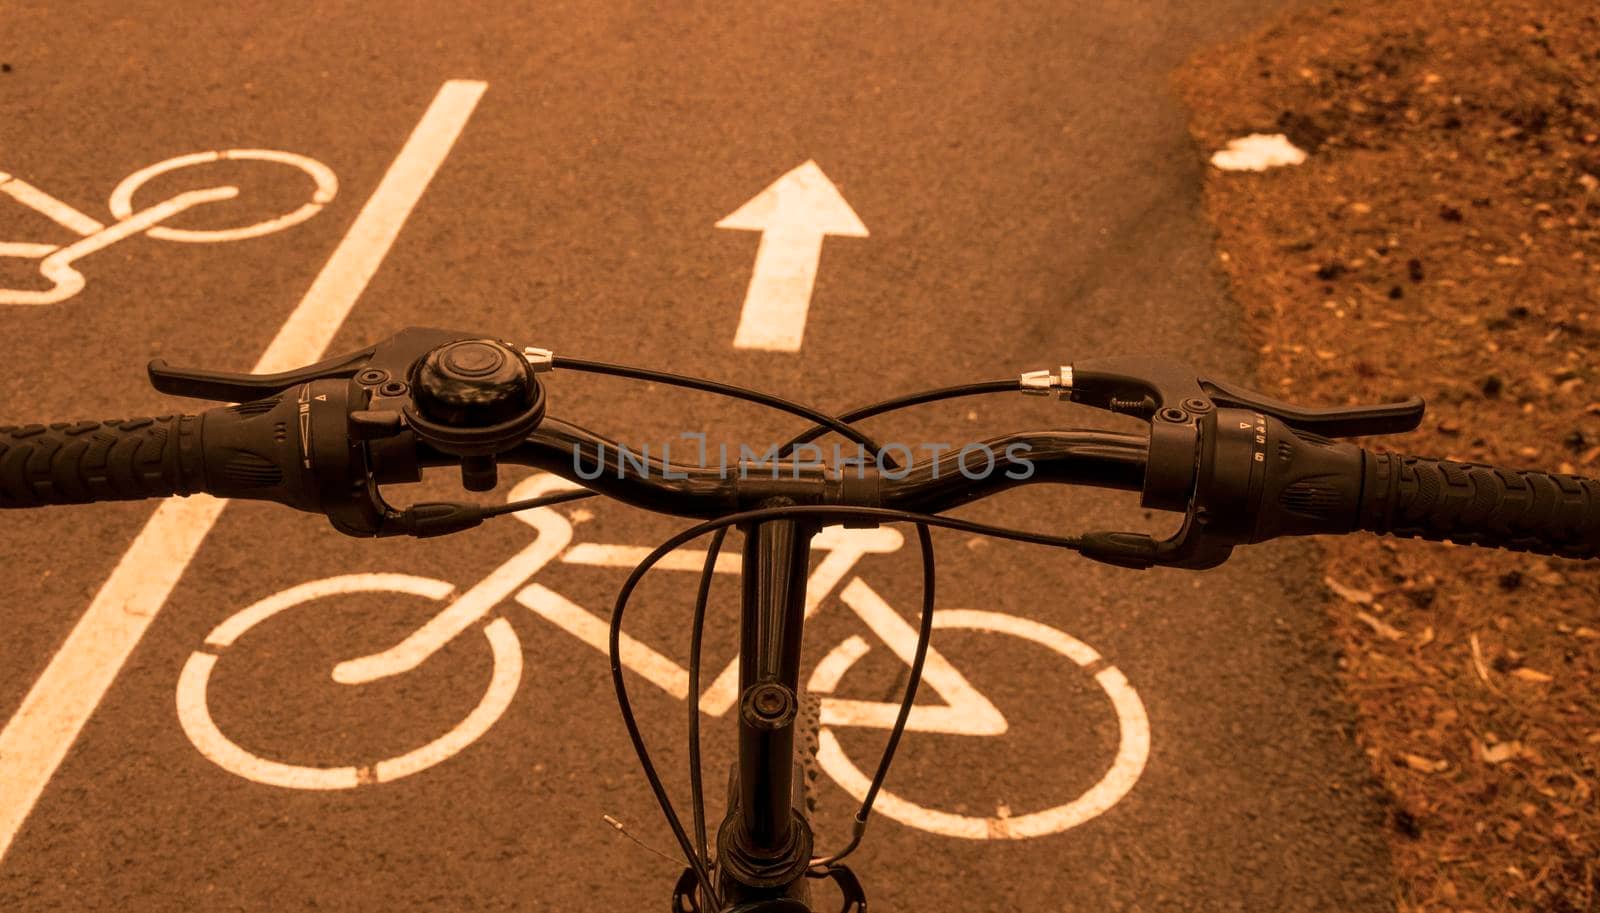 Bike path in a city Park, bike path sign on asphalt by inxti